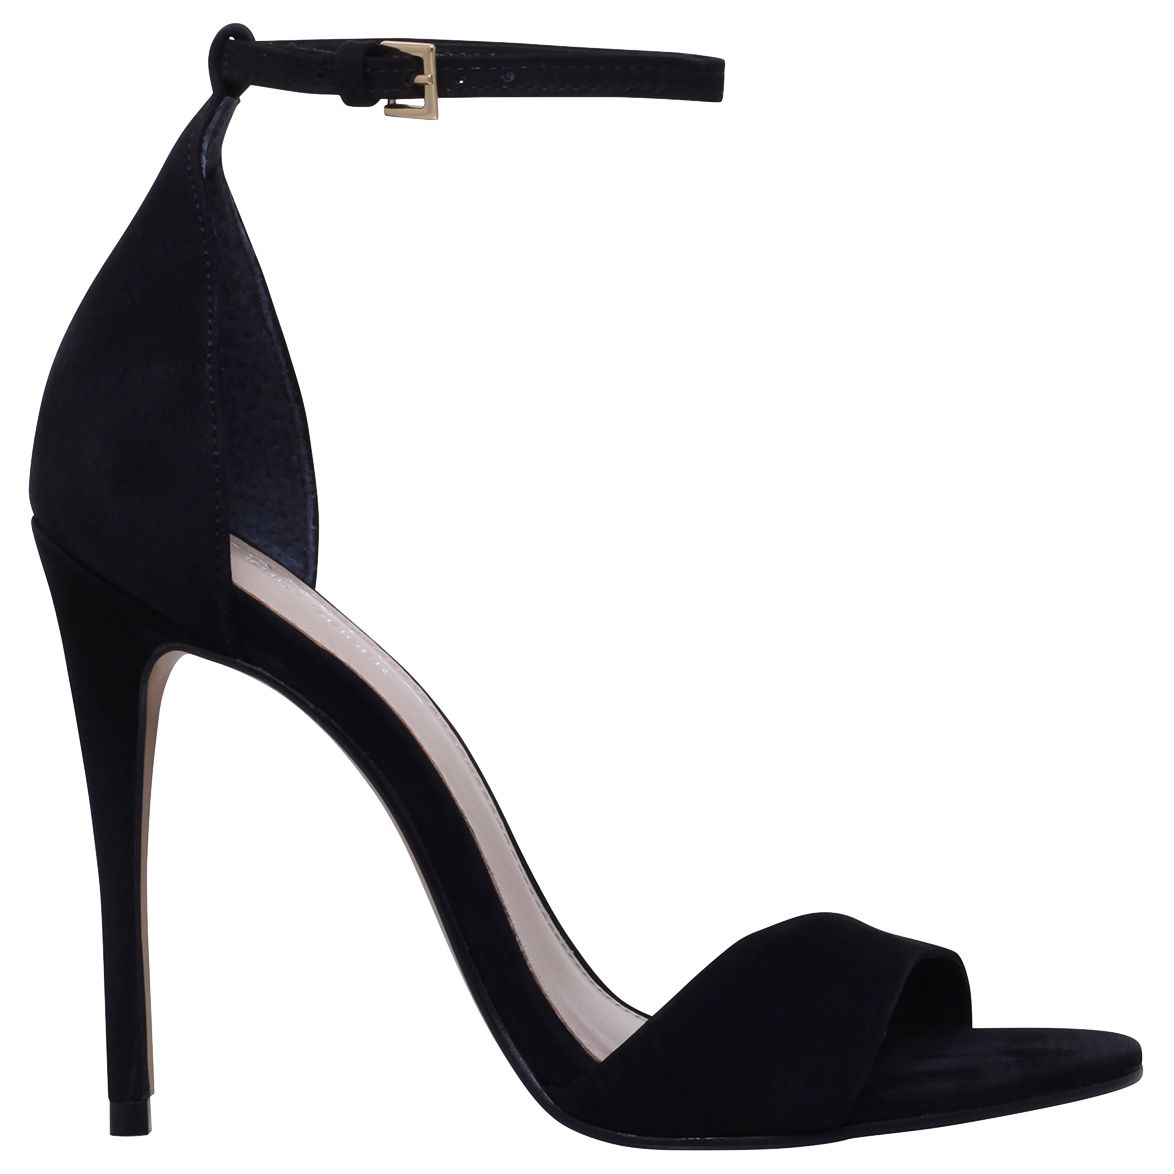 Carvela Glimmer High Heel Sandals, Black Nubuck, 7